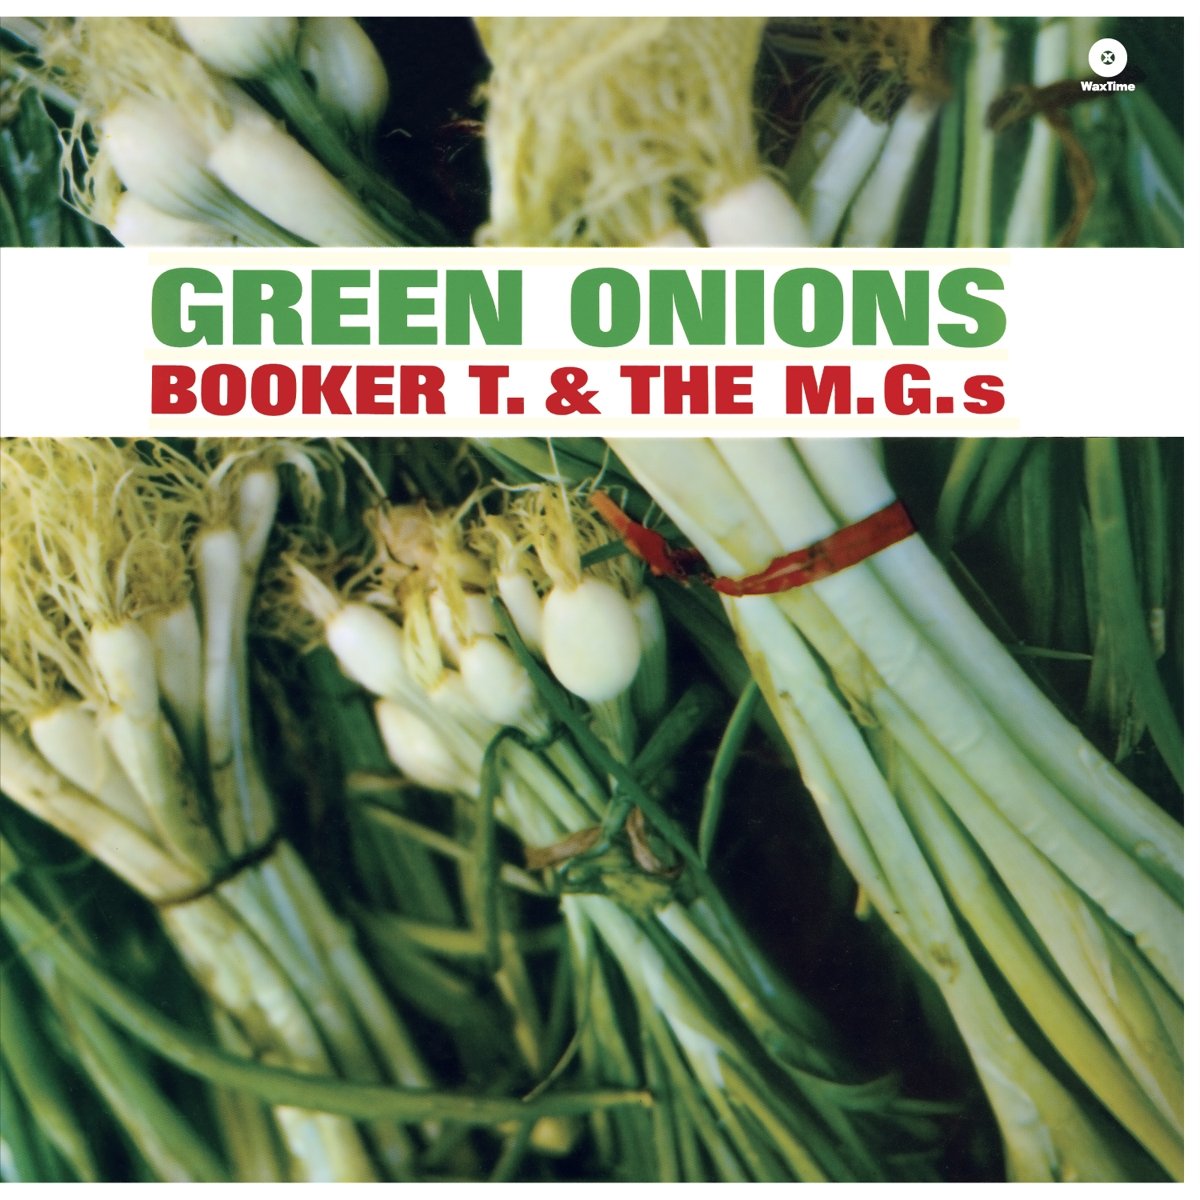 BOOKER T. & THE M.G.'S - GREEN ONIONS - VINYL LP